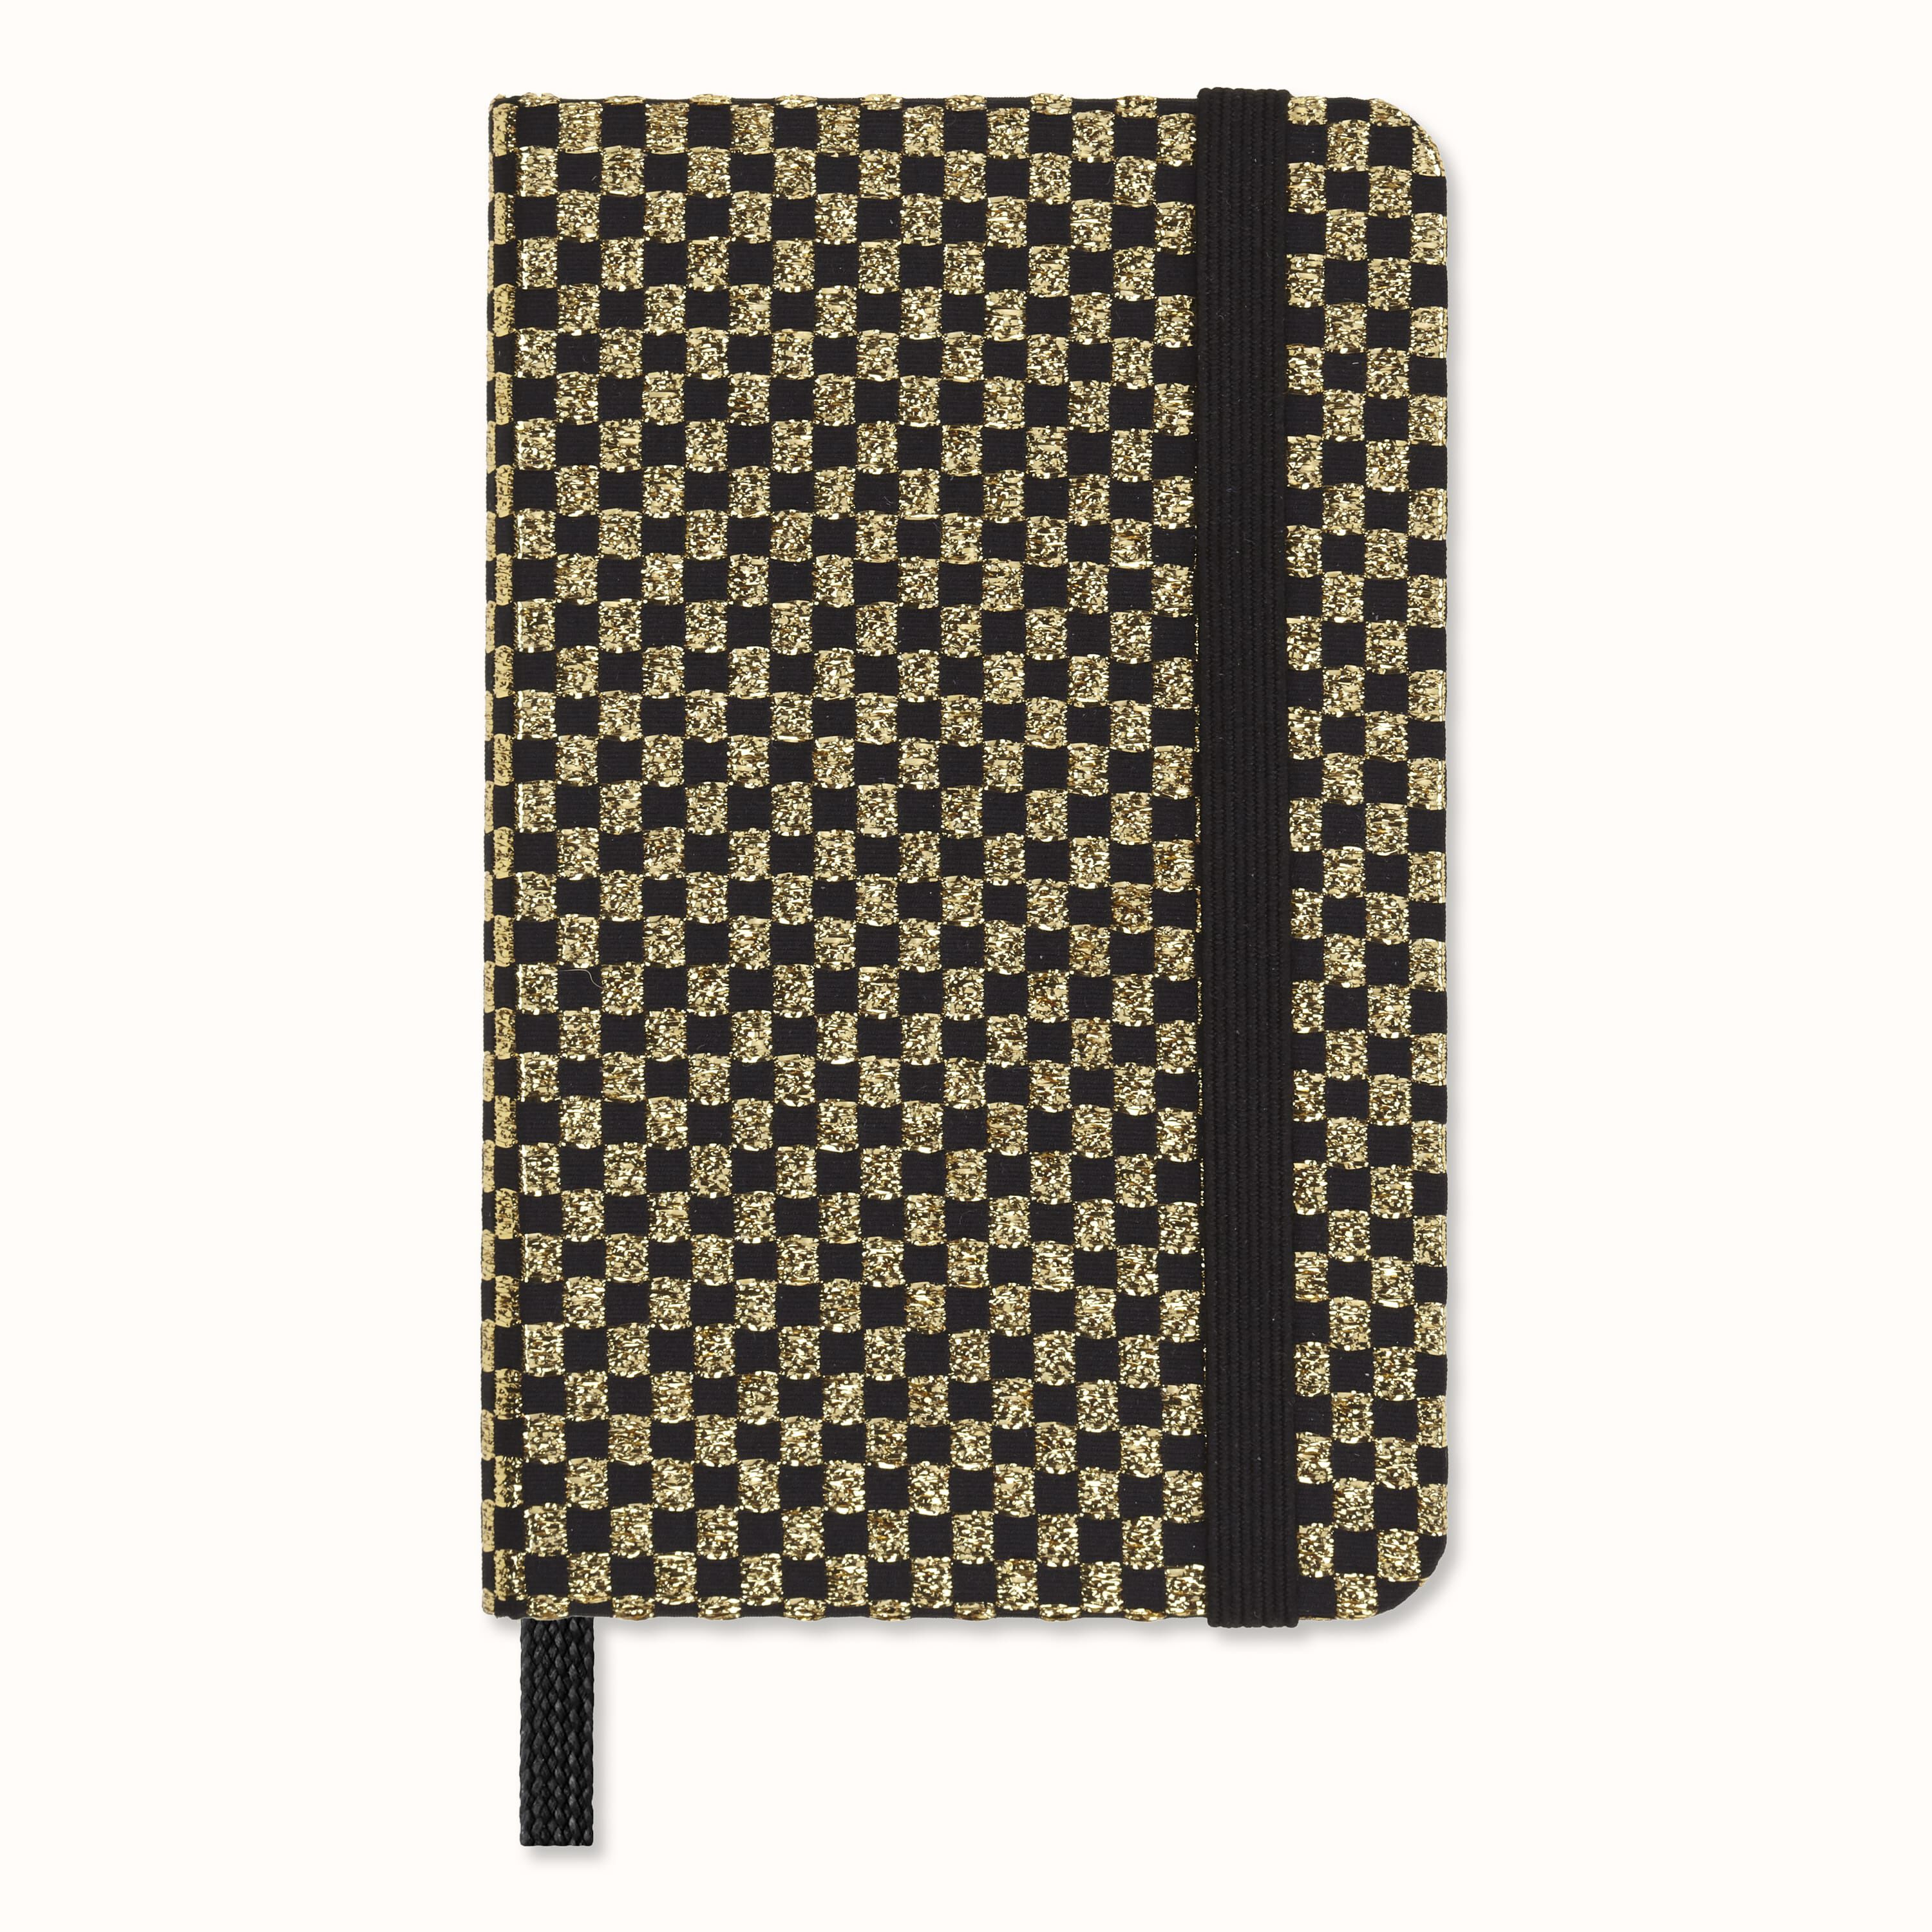 Limited Edition Notebooks | Moleskine